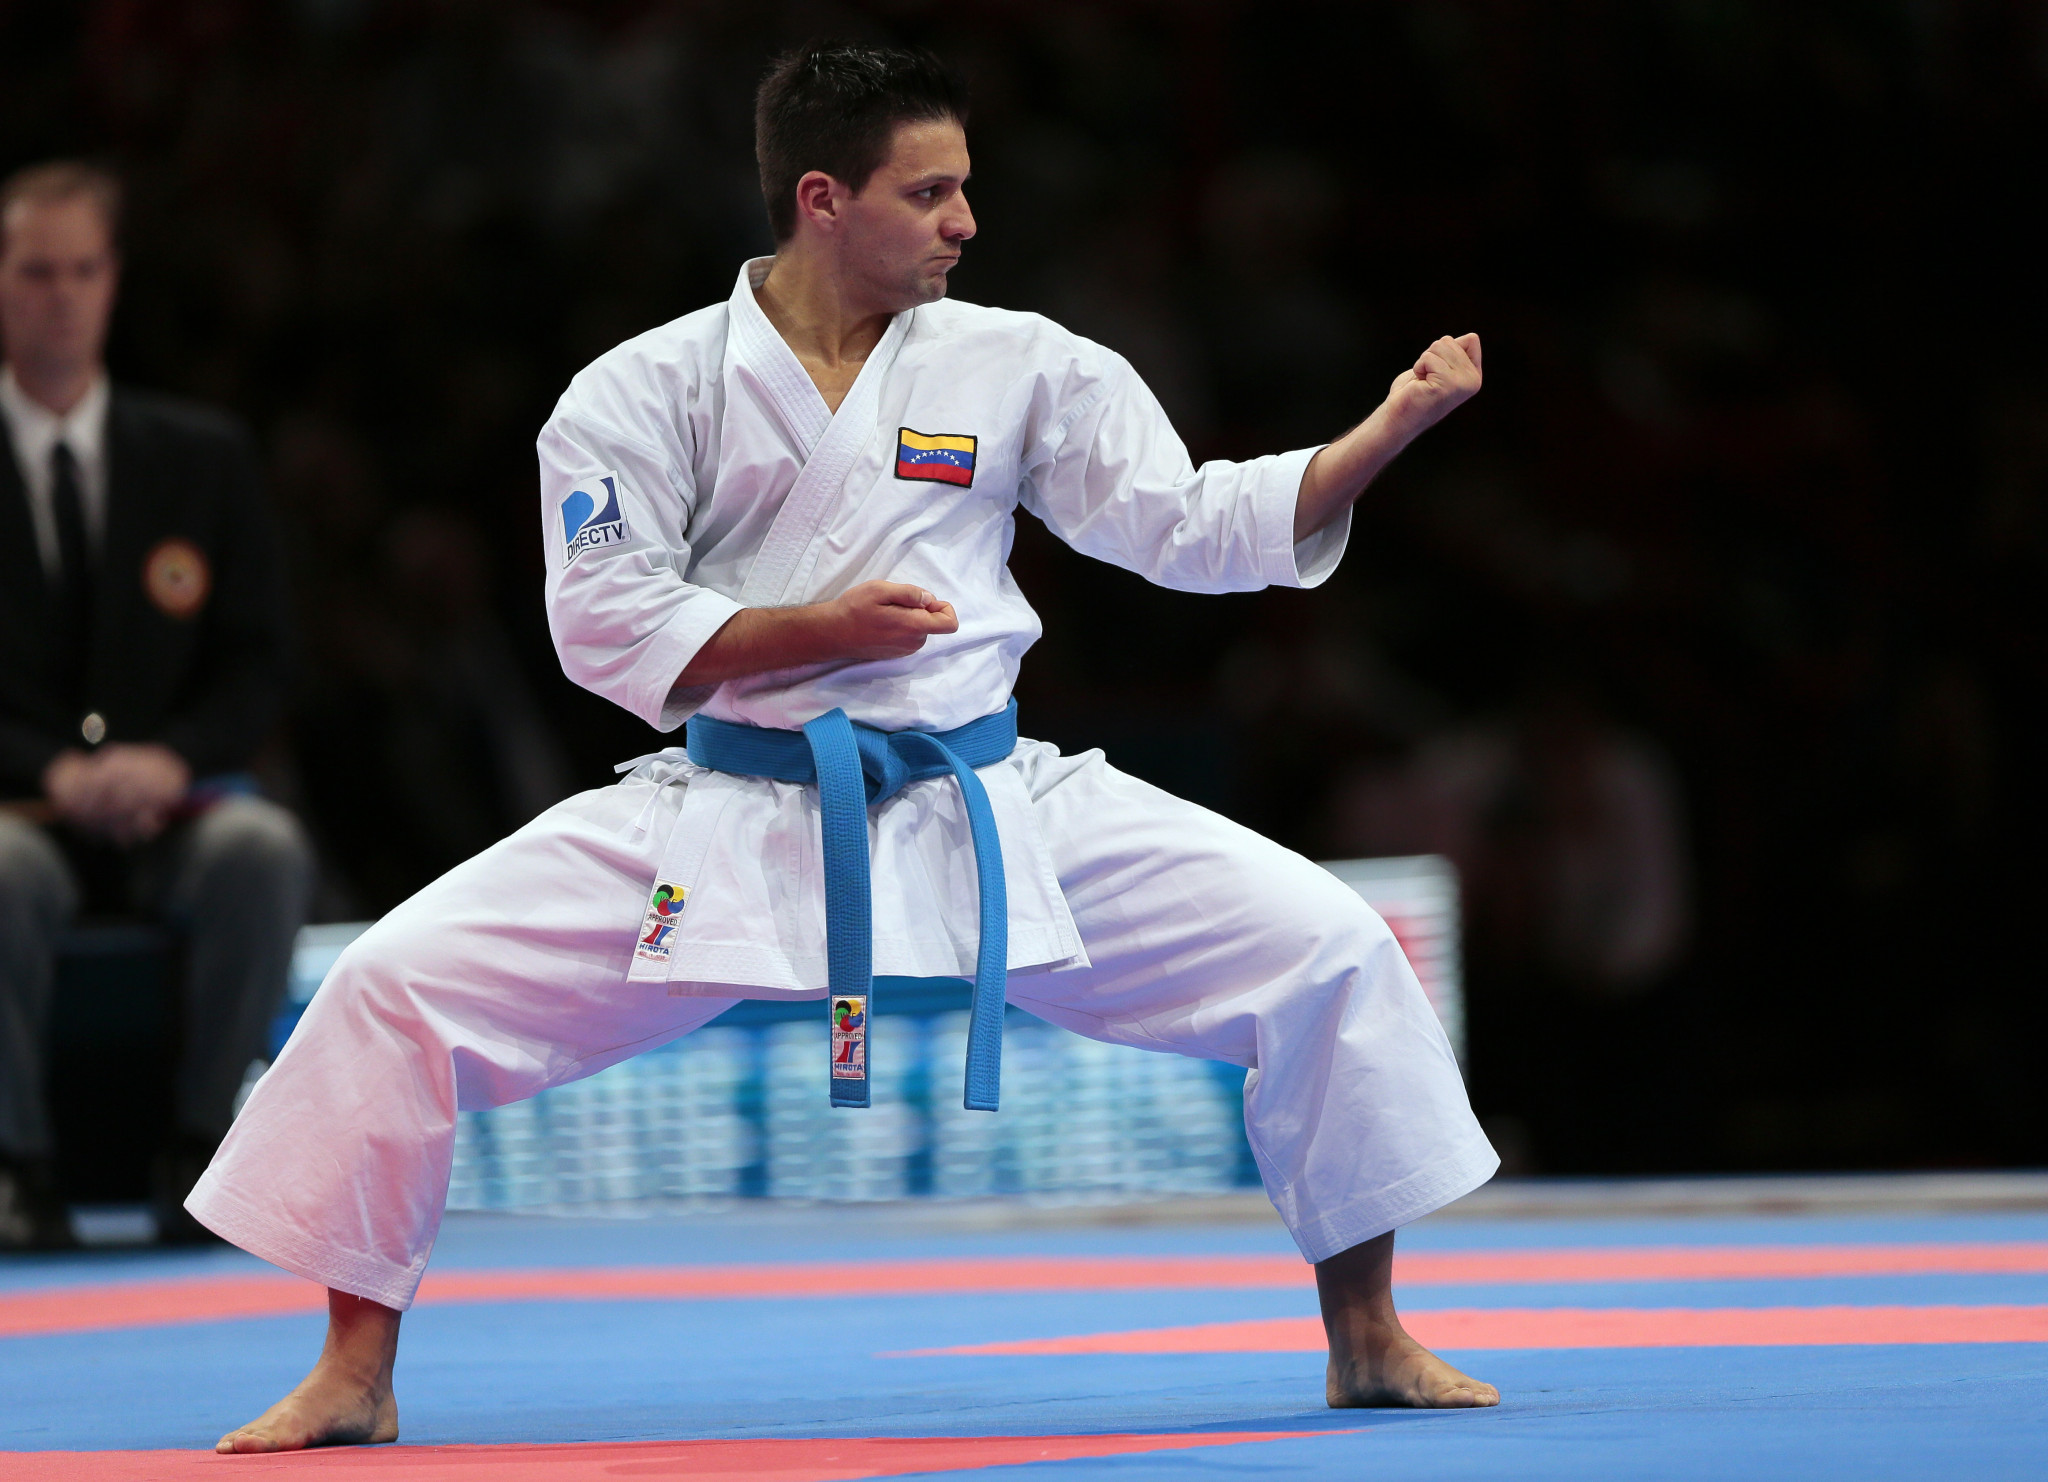 Antonio Díaz has won world titles for Venezuela in karate ©Getty Images